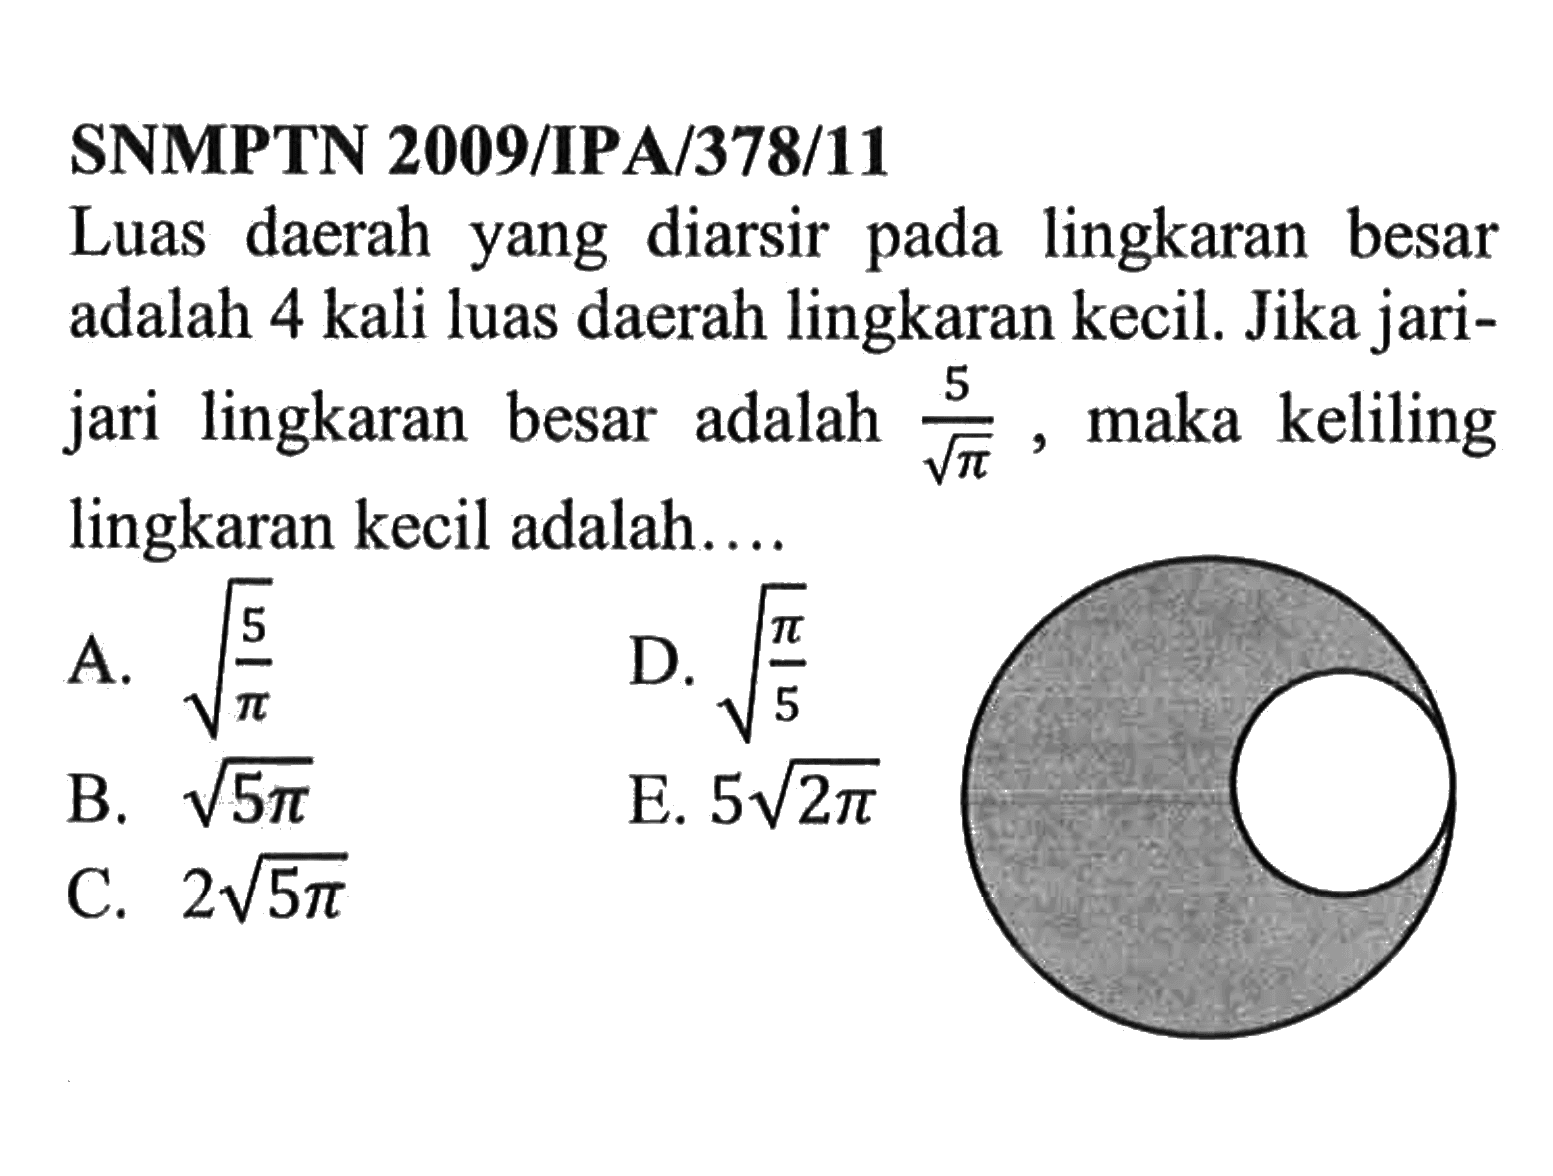 SNMPTN 2009/IPA/378/11Luas daerah yang diarsir pada lingkaran besar adalah 4 kali luas daerah lingkaran kecil. Jika jarijari lingkaran besar adalah  5/akar(pi) , maka keliling lingkaran kecil adalah...